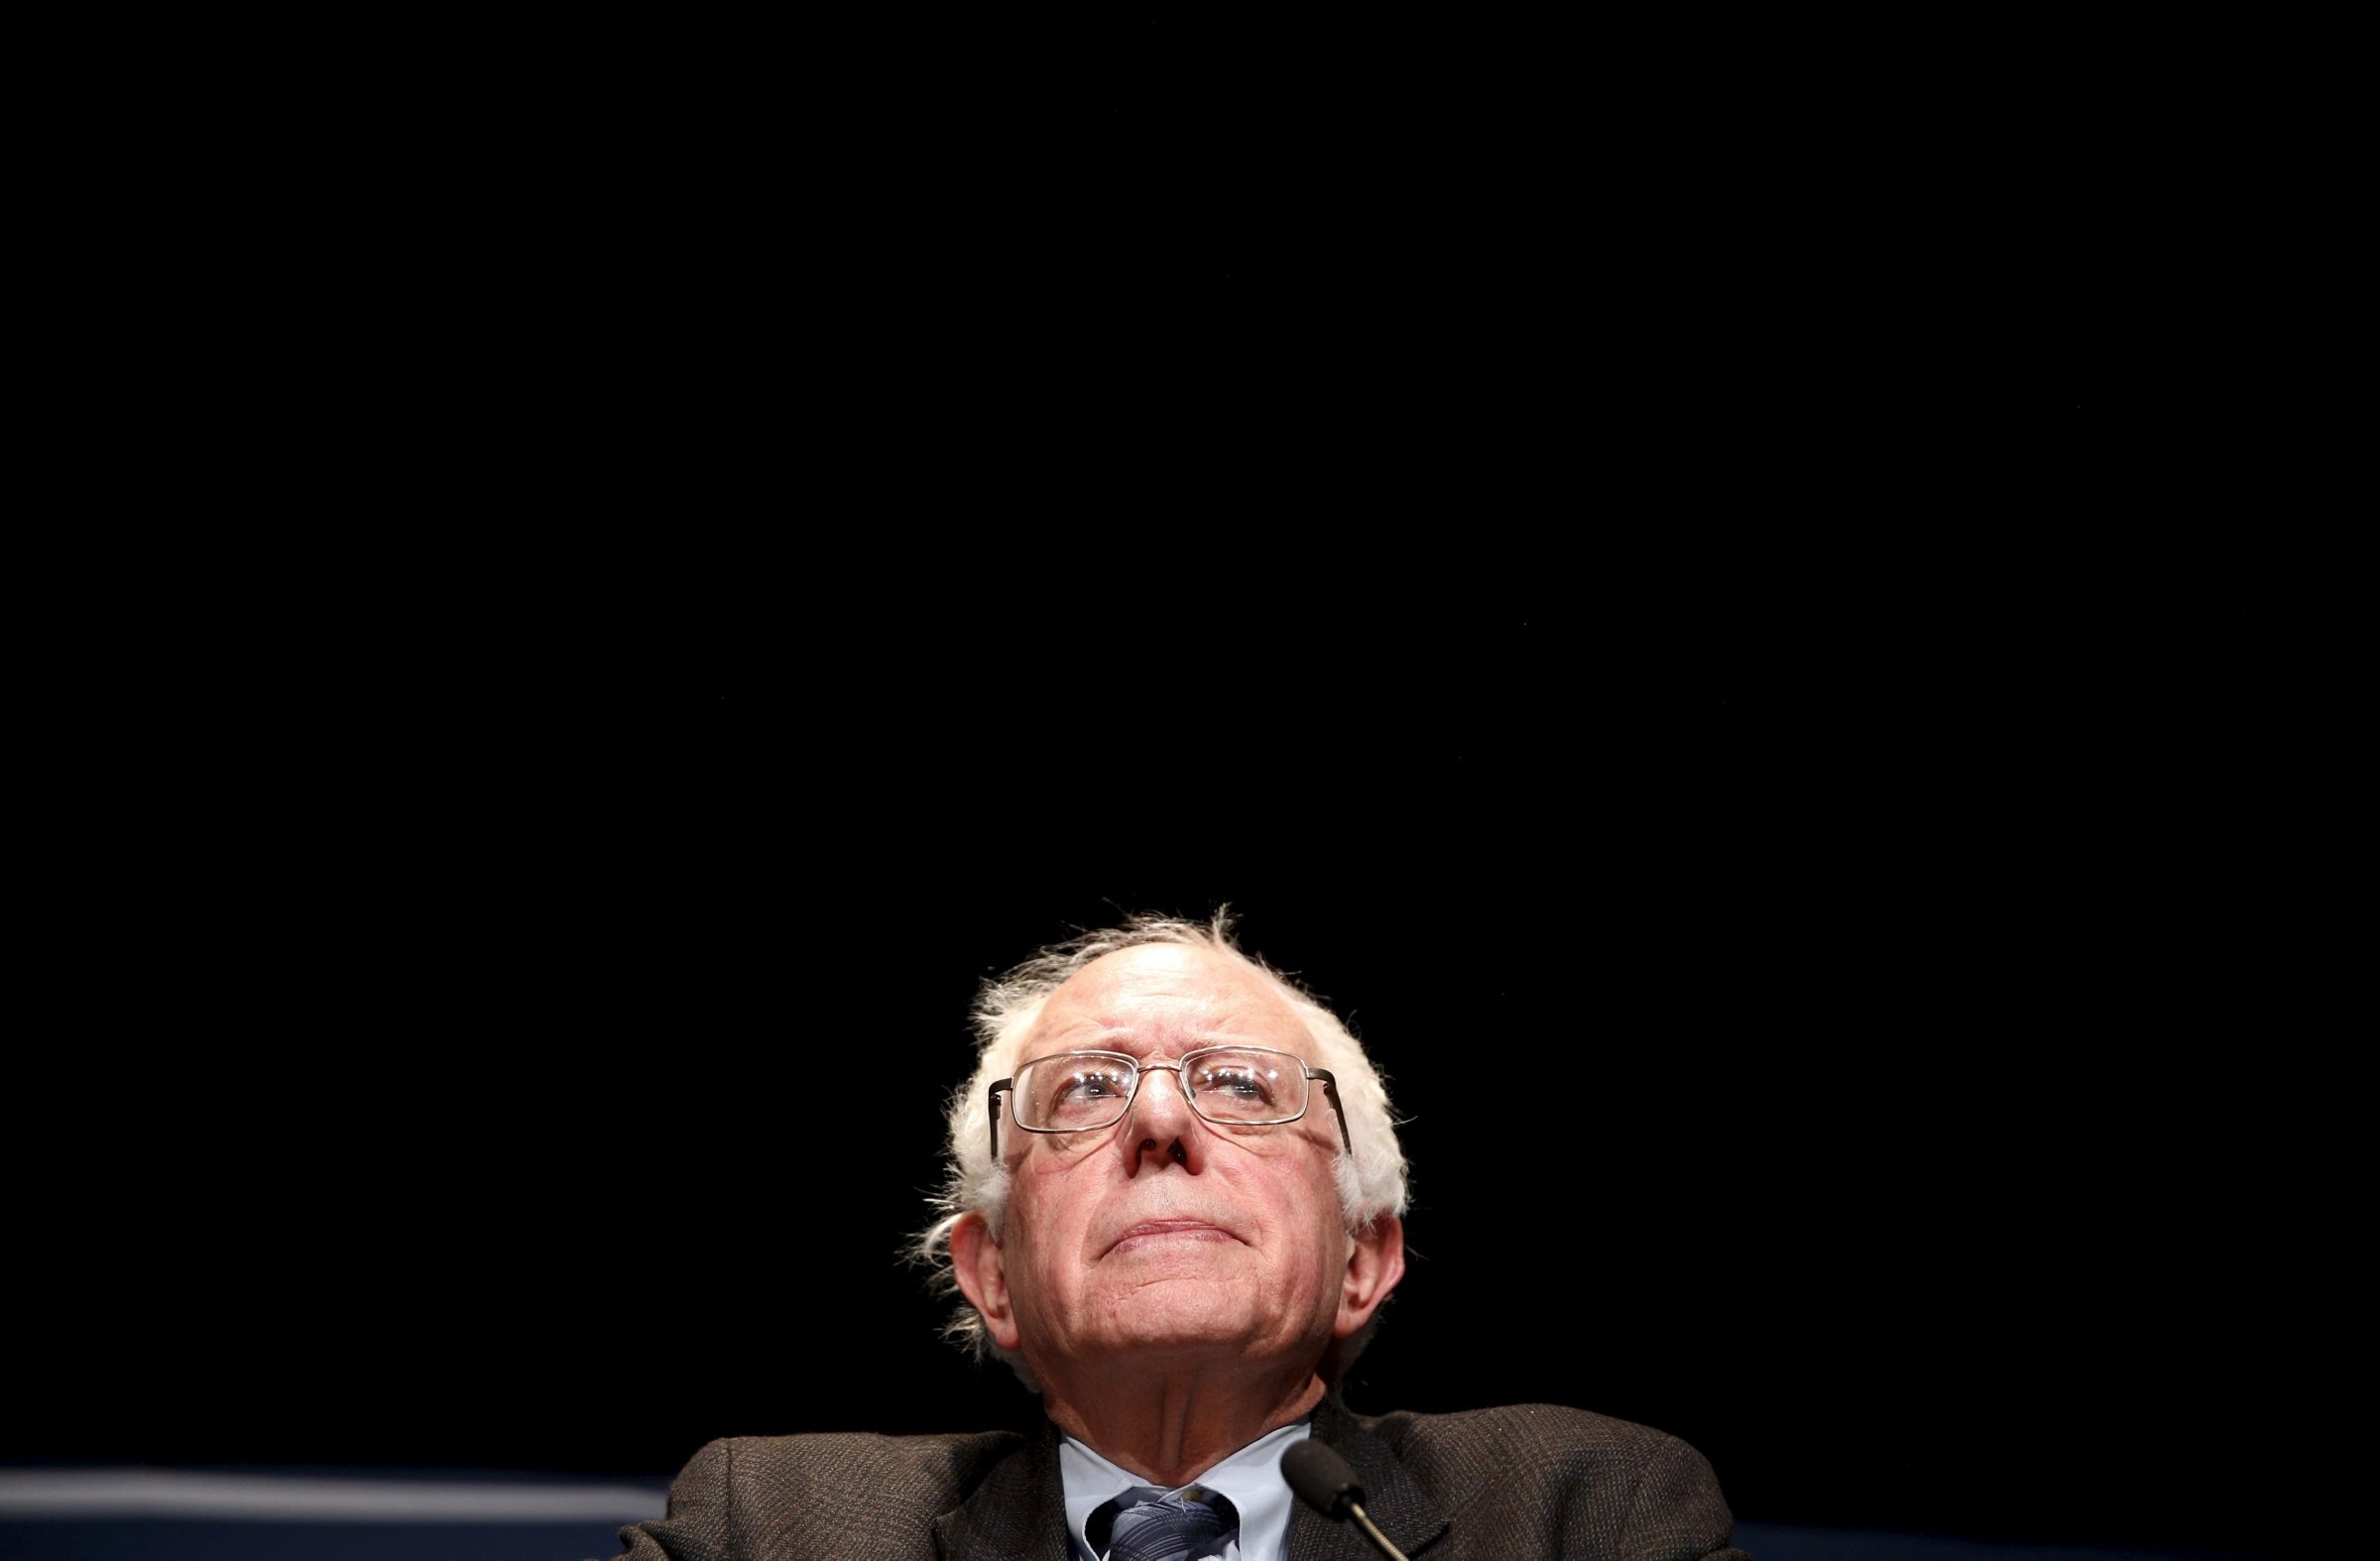 Democratic U.S. presidential candidate Senator Bernie Sanders speaks during a campaign event at Wartburg College in Waverly, Iowa